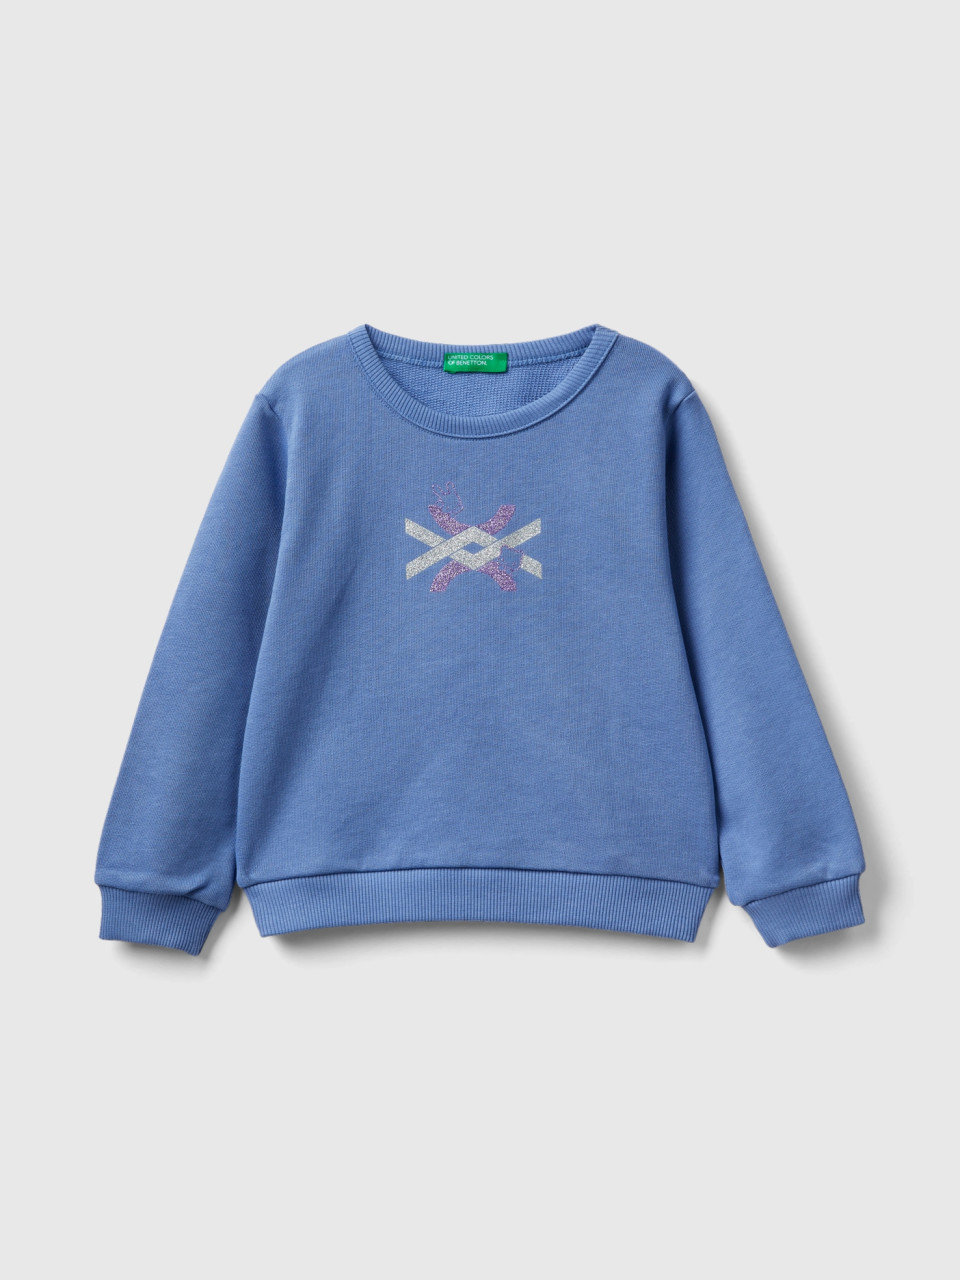 Benetton, Sky Blue Sweatshirt In Organic Cotton With Glittery Print, Light Blue, Kids